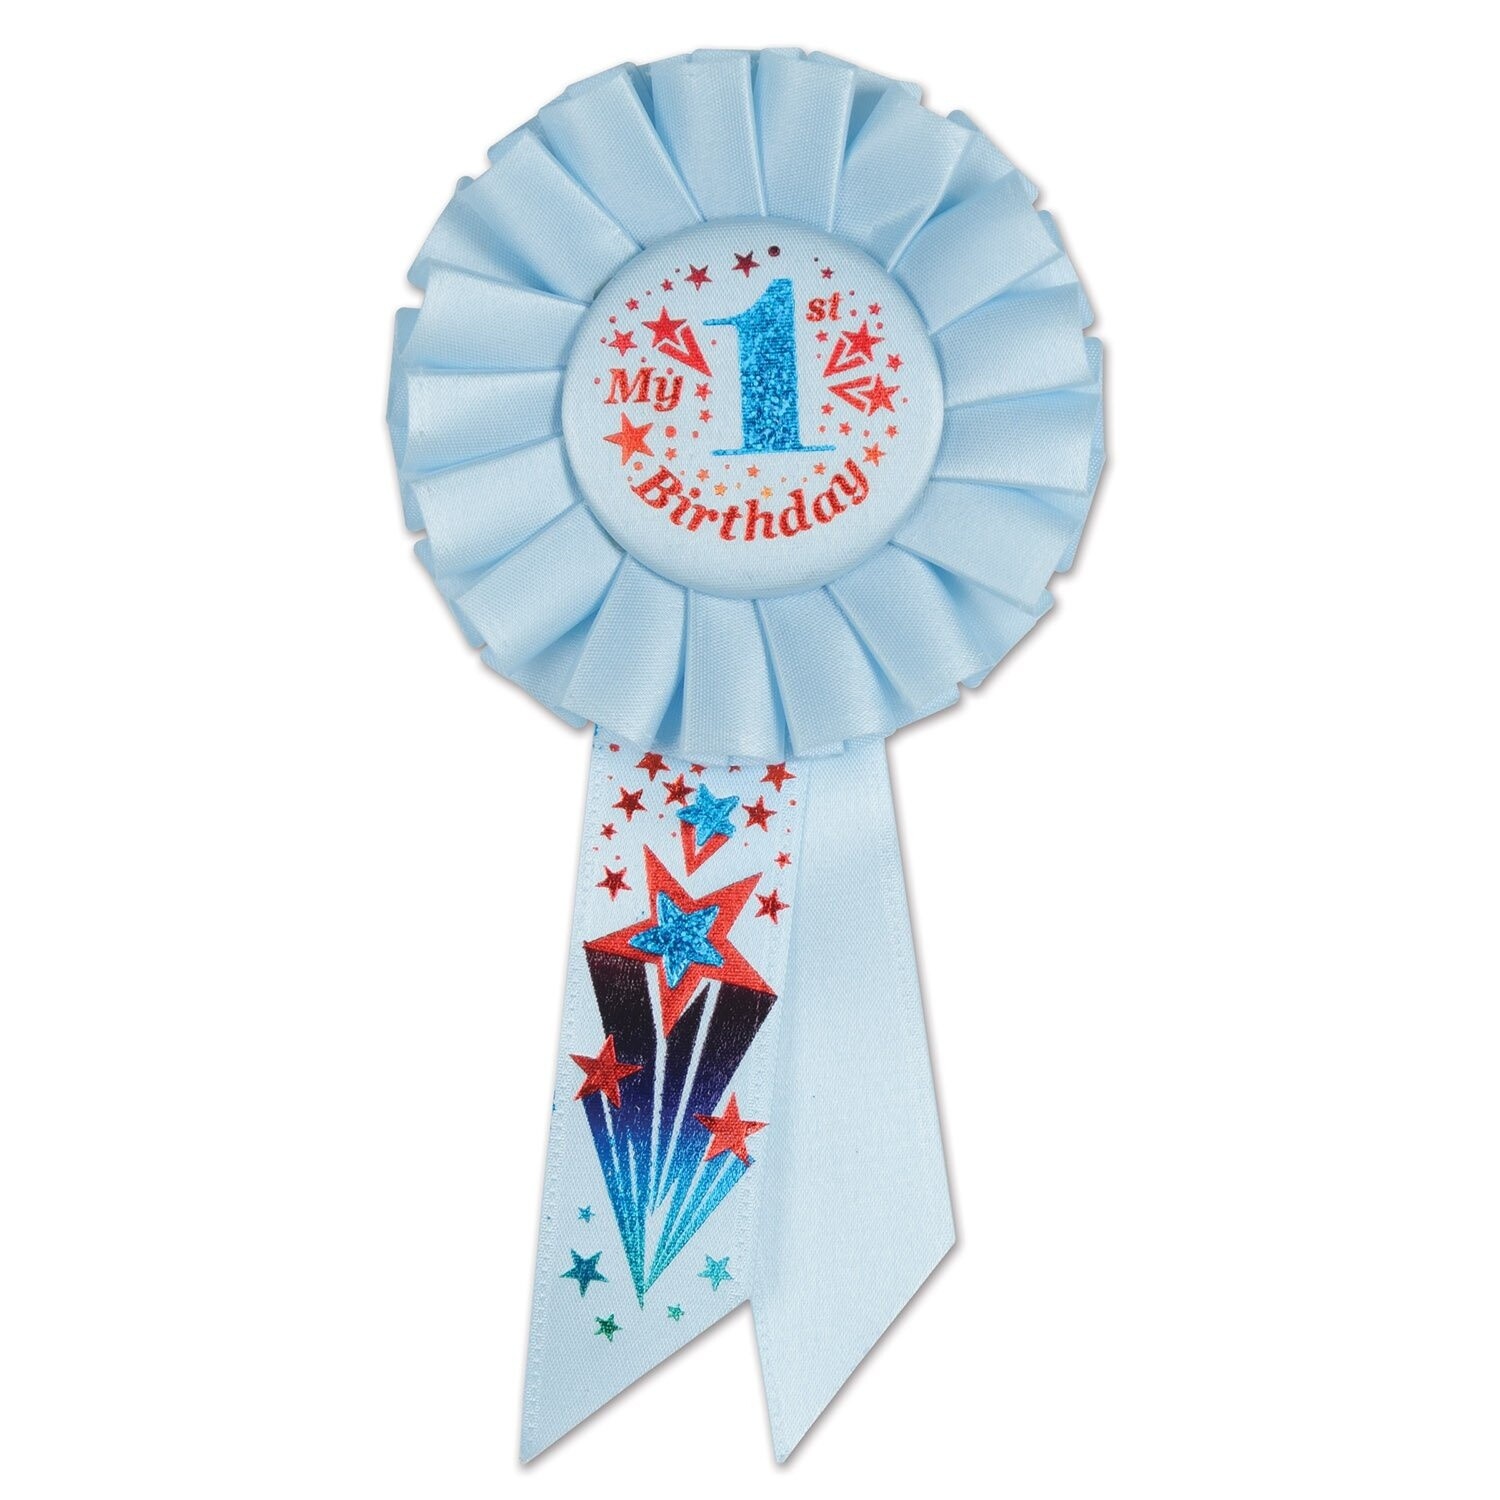 Award Ribbon # 1- Blue